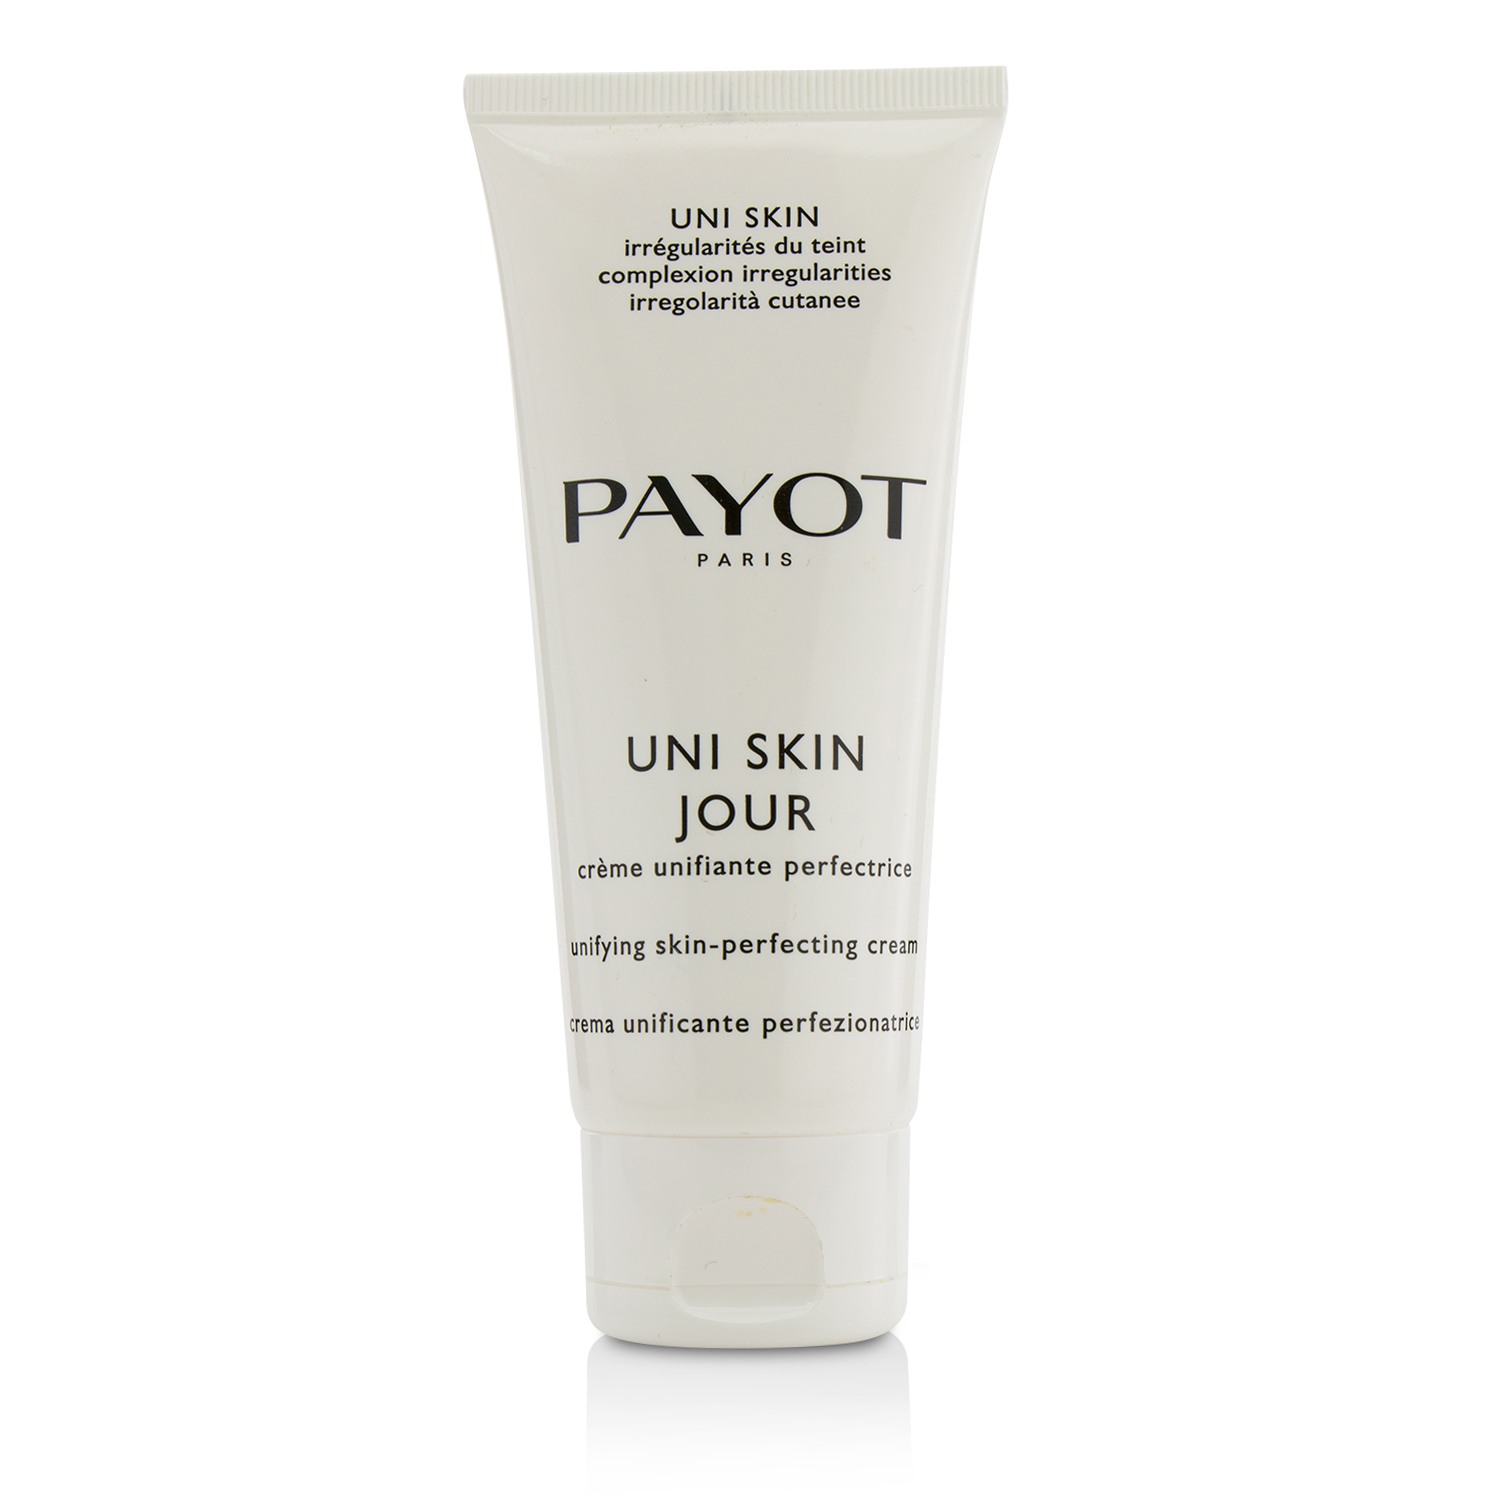 Uni Skin Jour Unifying Skin-Perfecting Cream (Salon Size) Payot Image